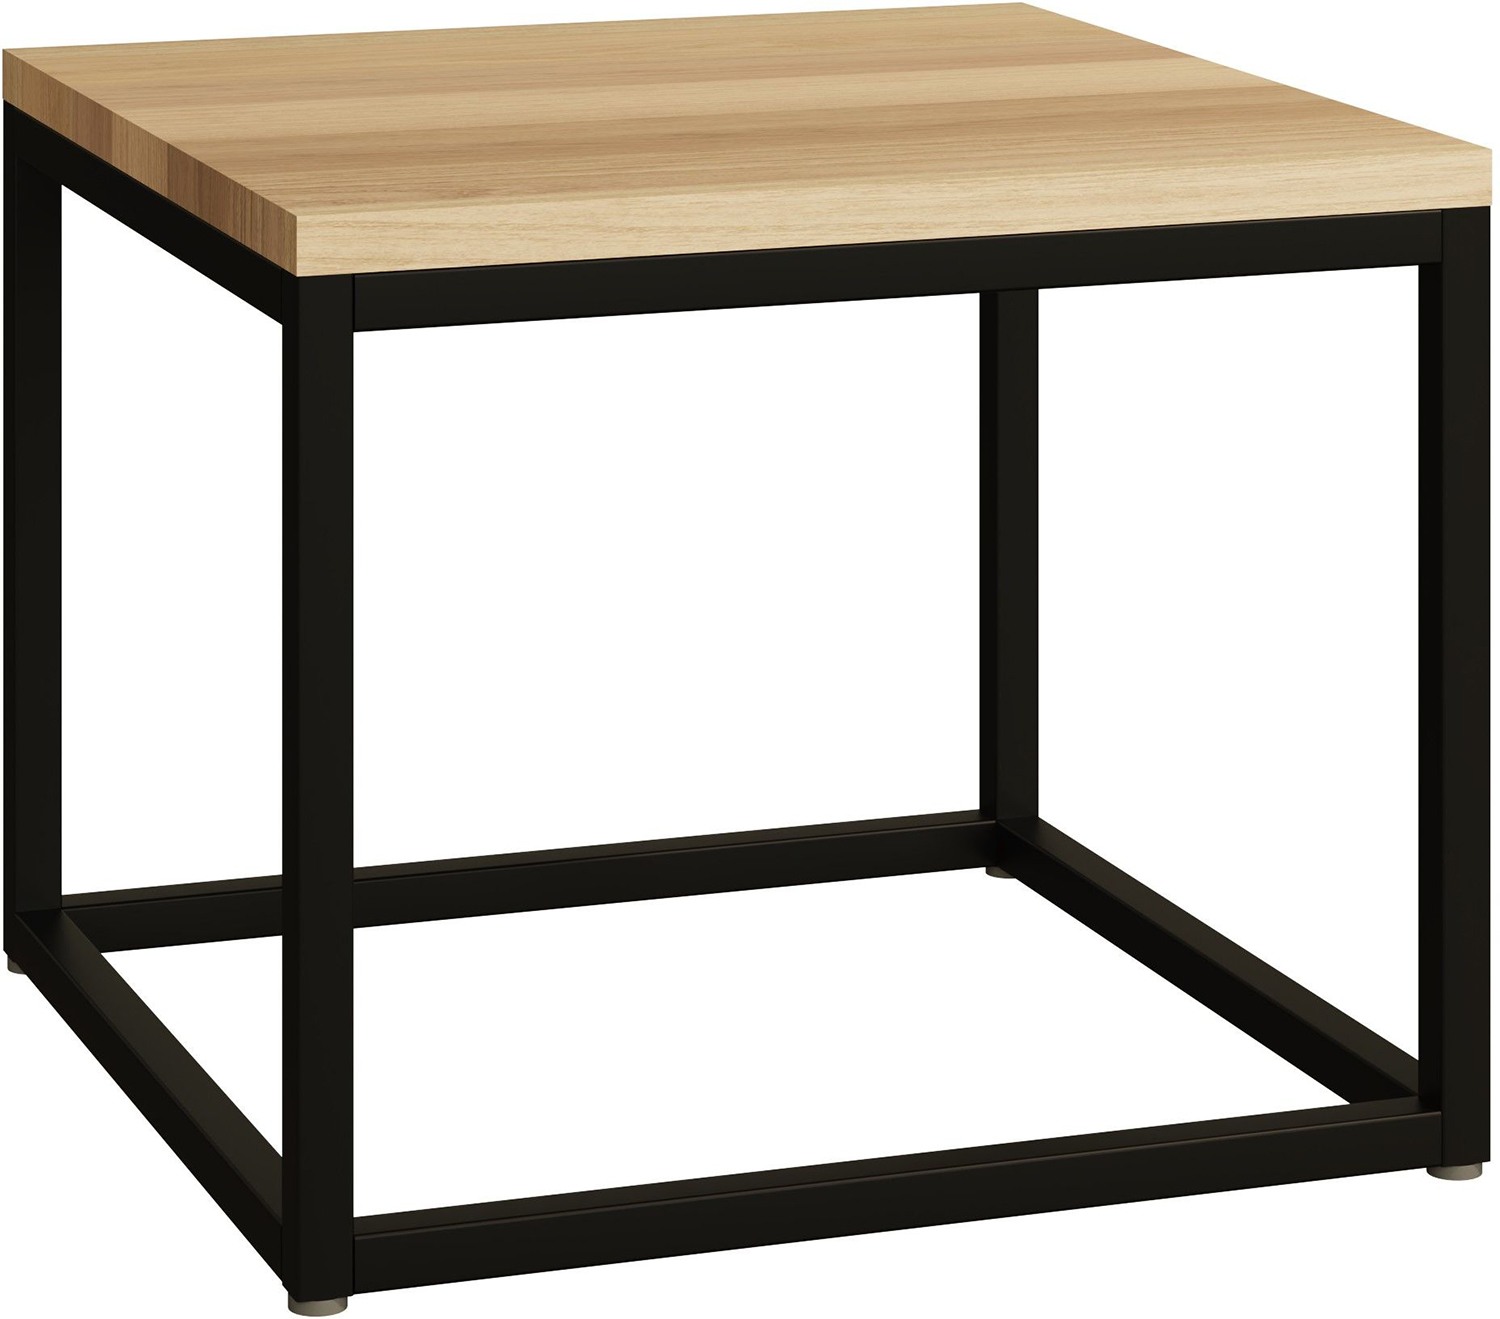 Bell & Stocchero Mono Square Side Table